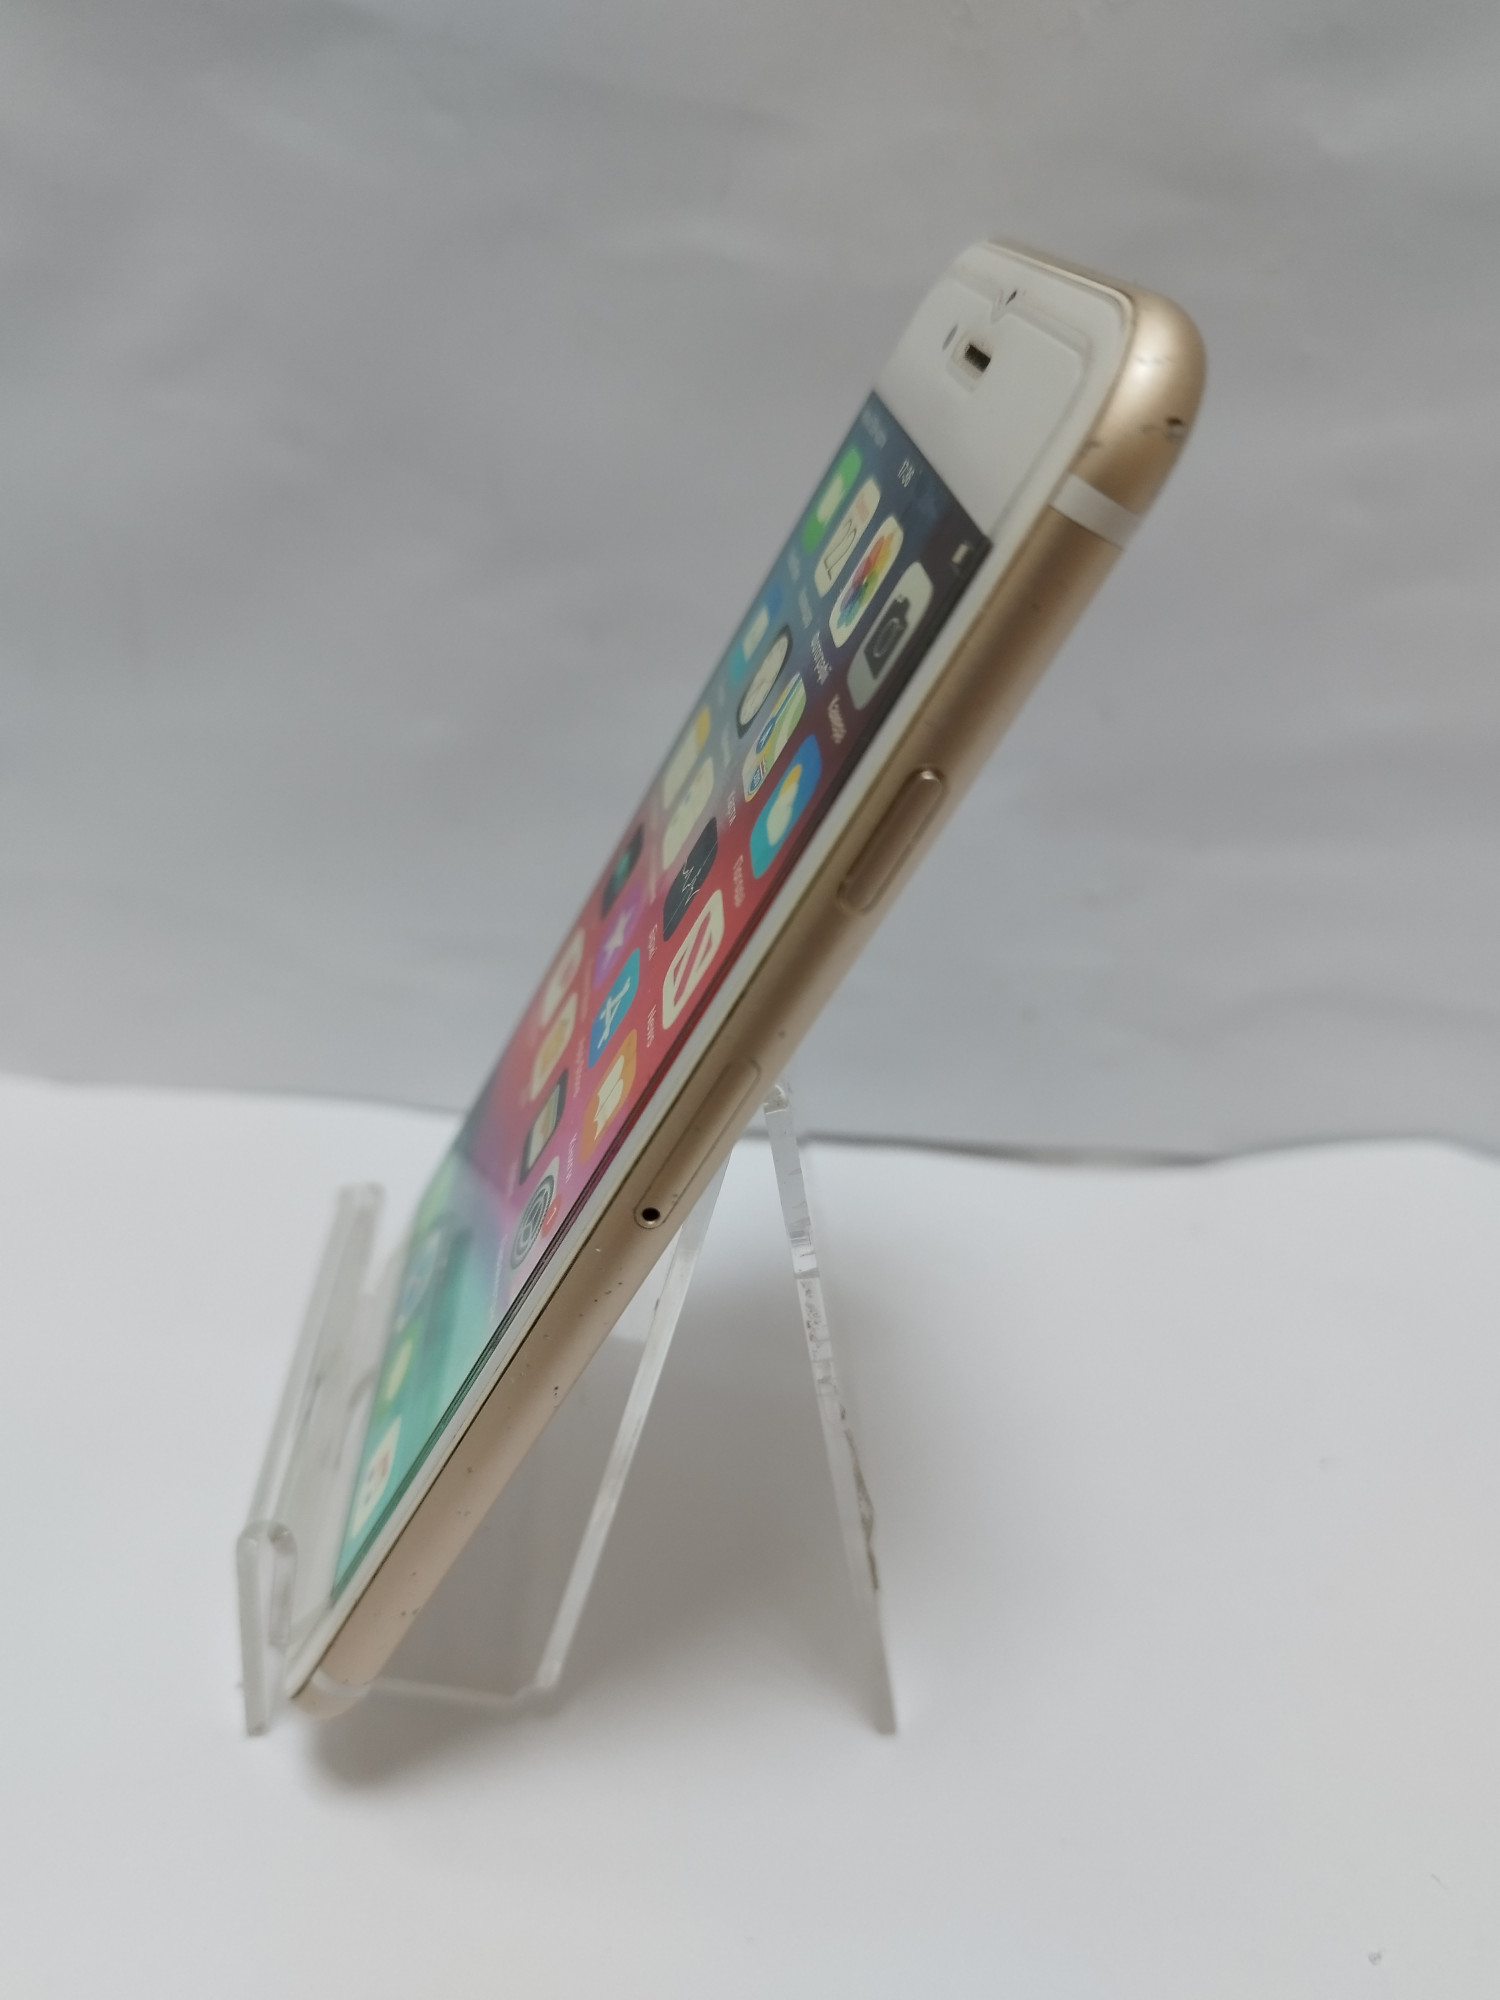 Apple iPhone 6 128Gb (Gold) 2